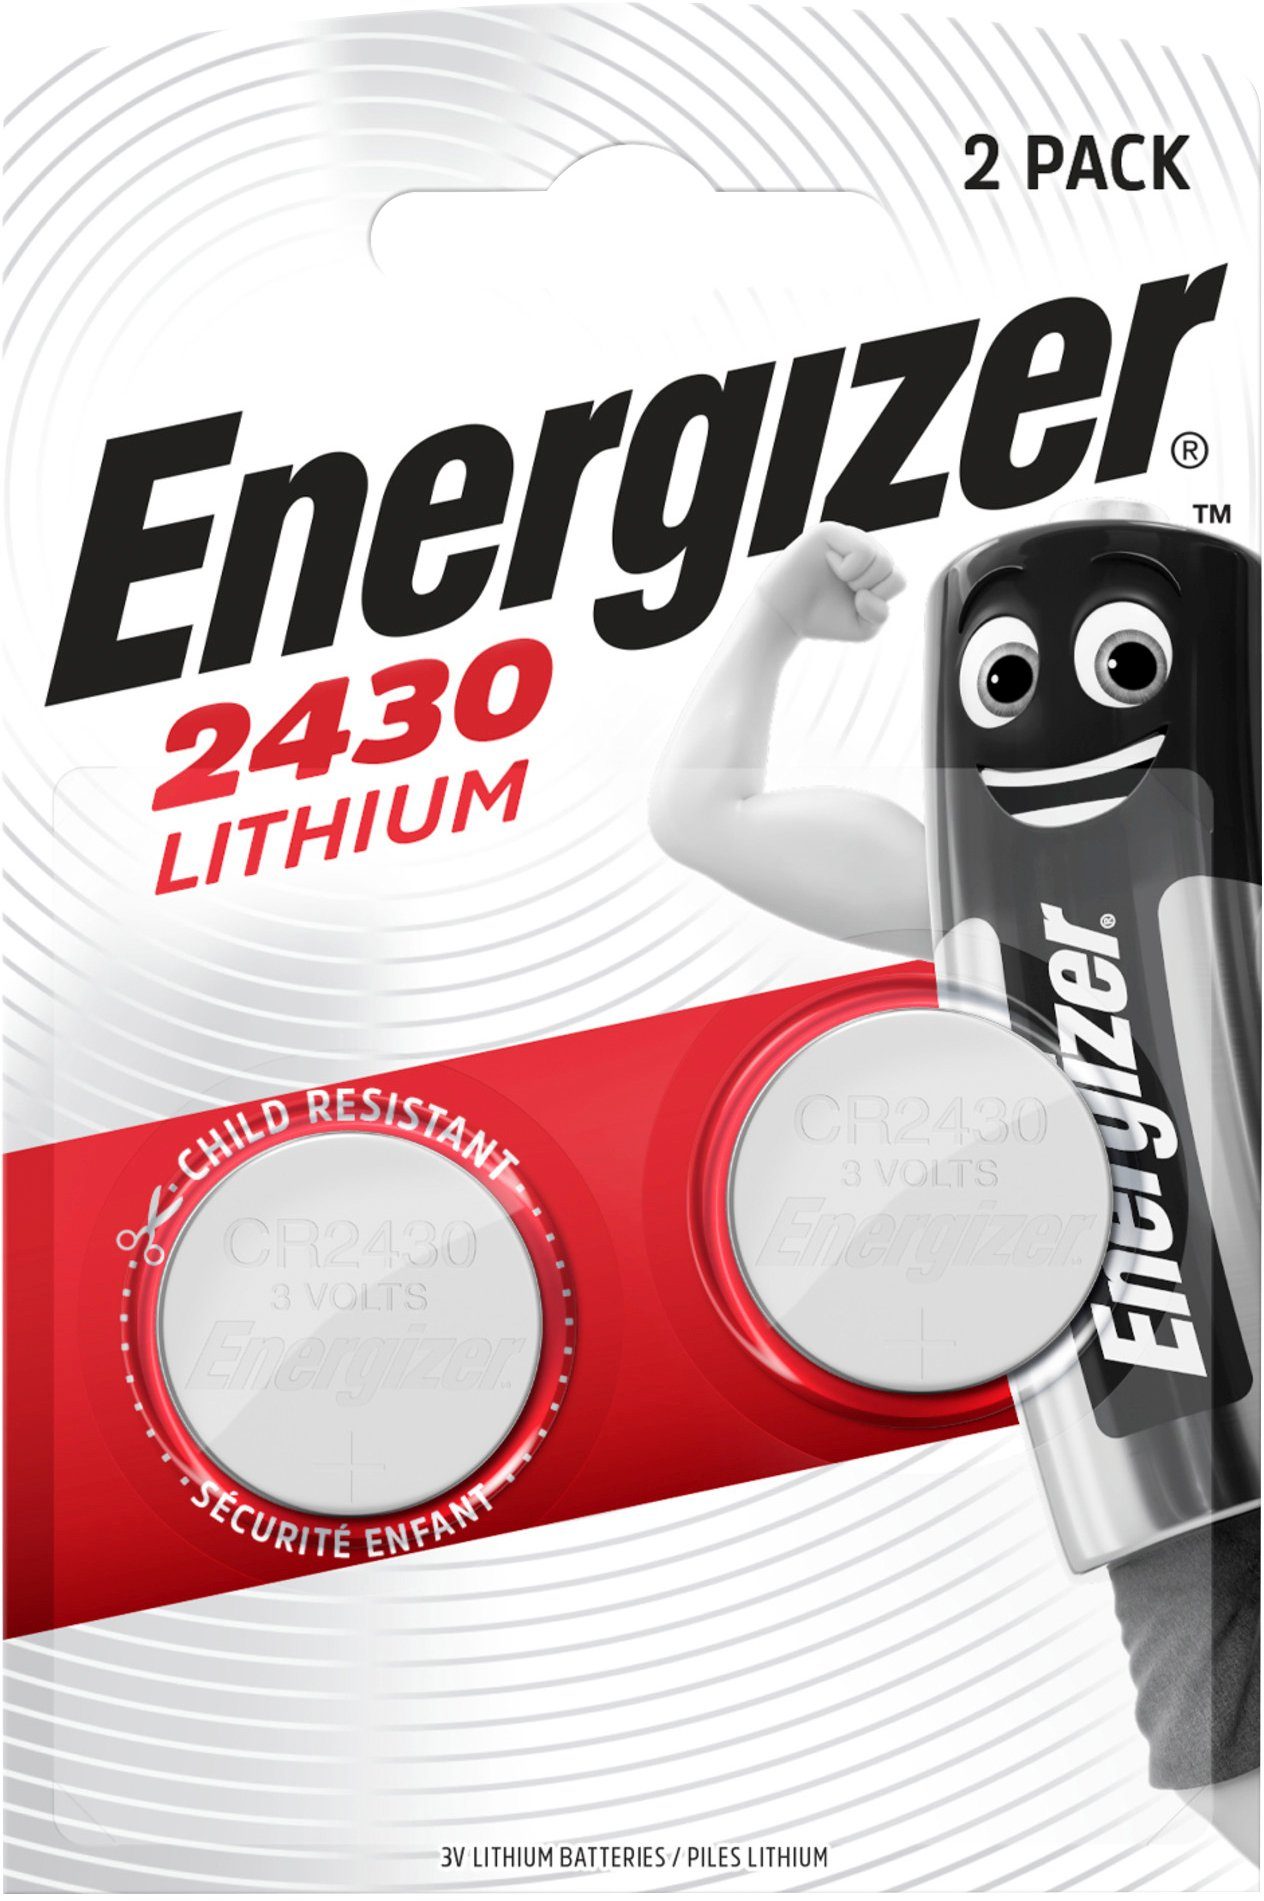 Energizer Lithium CR-Typ 2430 2 Stück Batterie, (3 V)